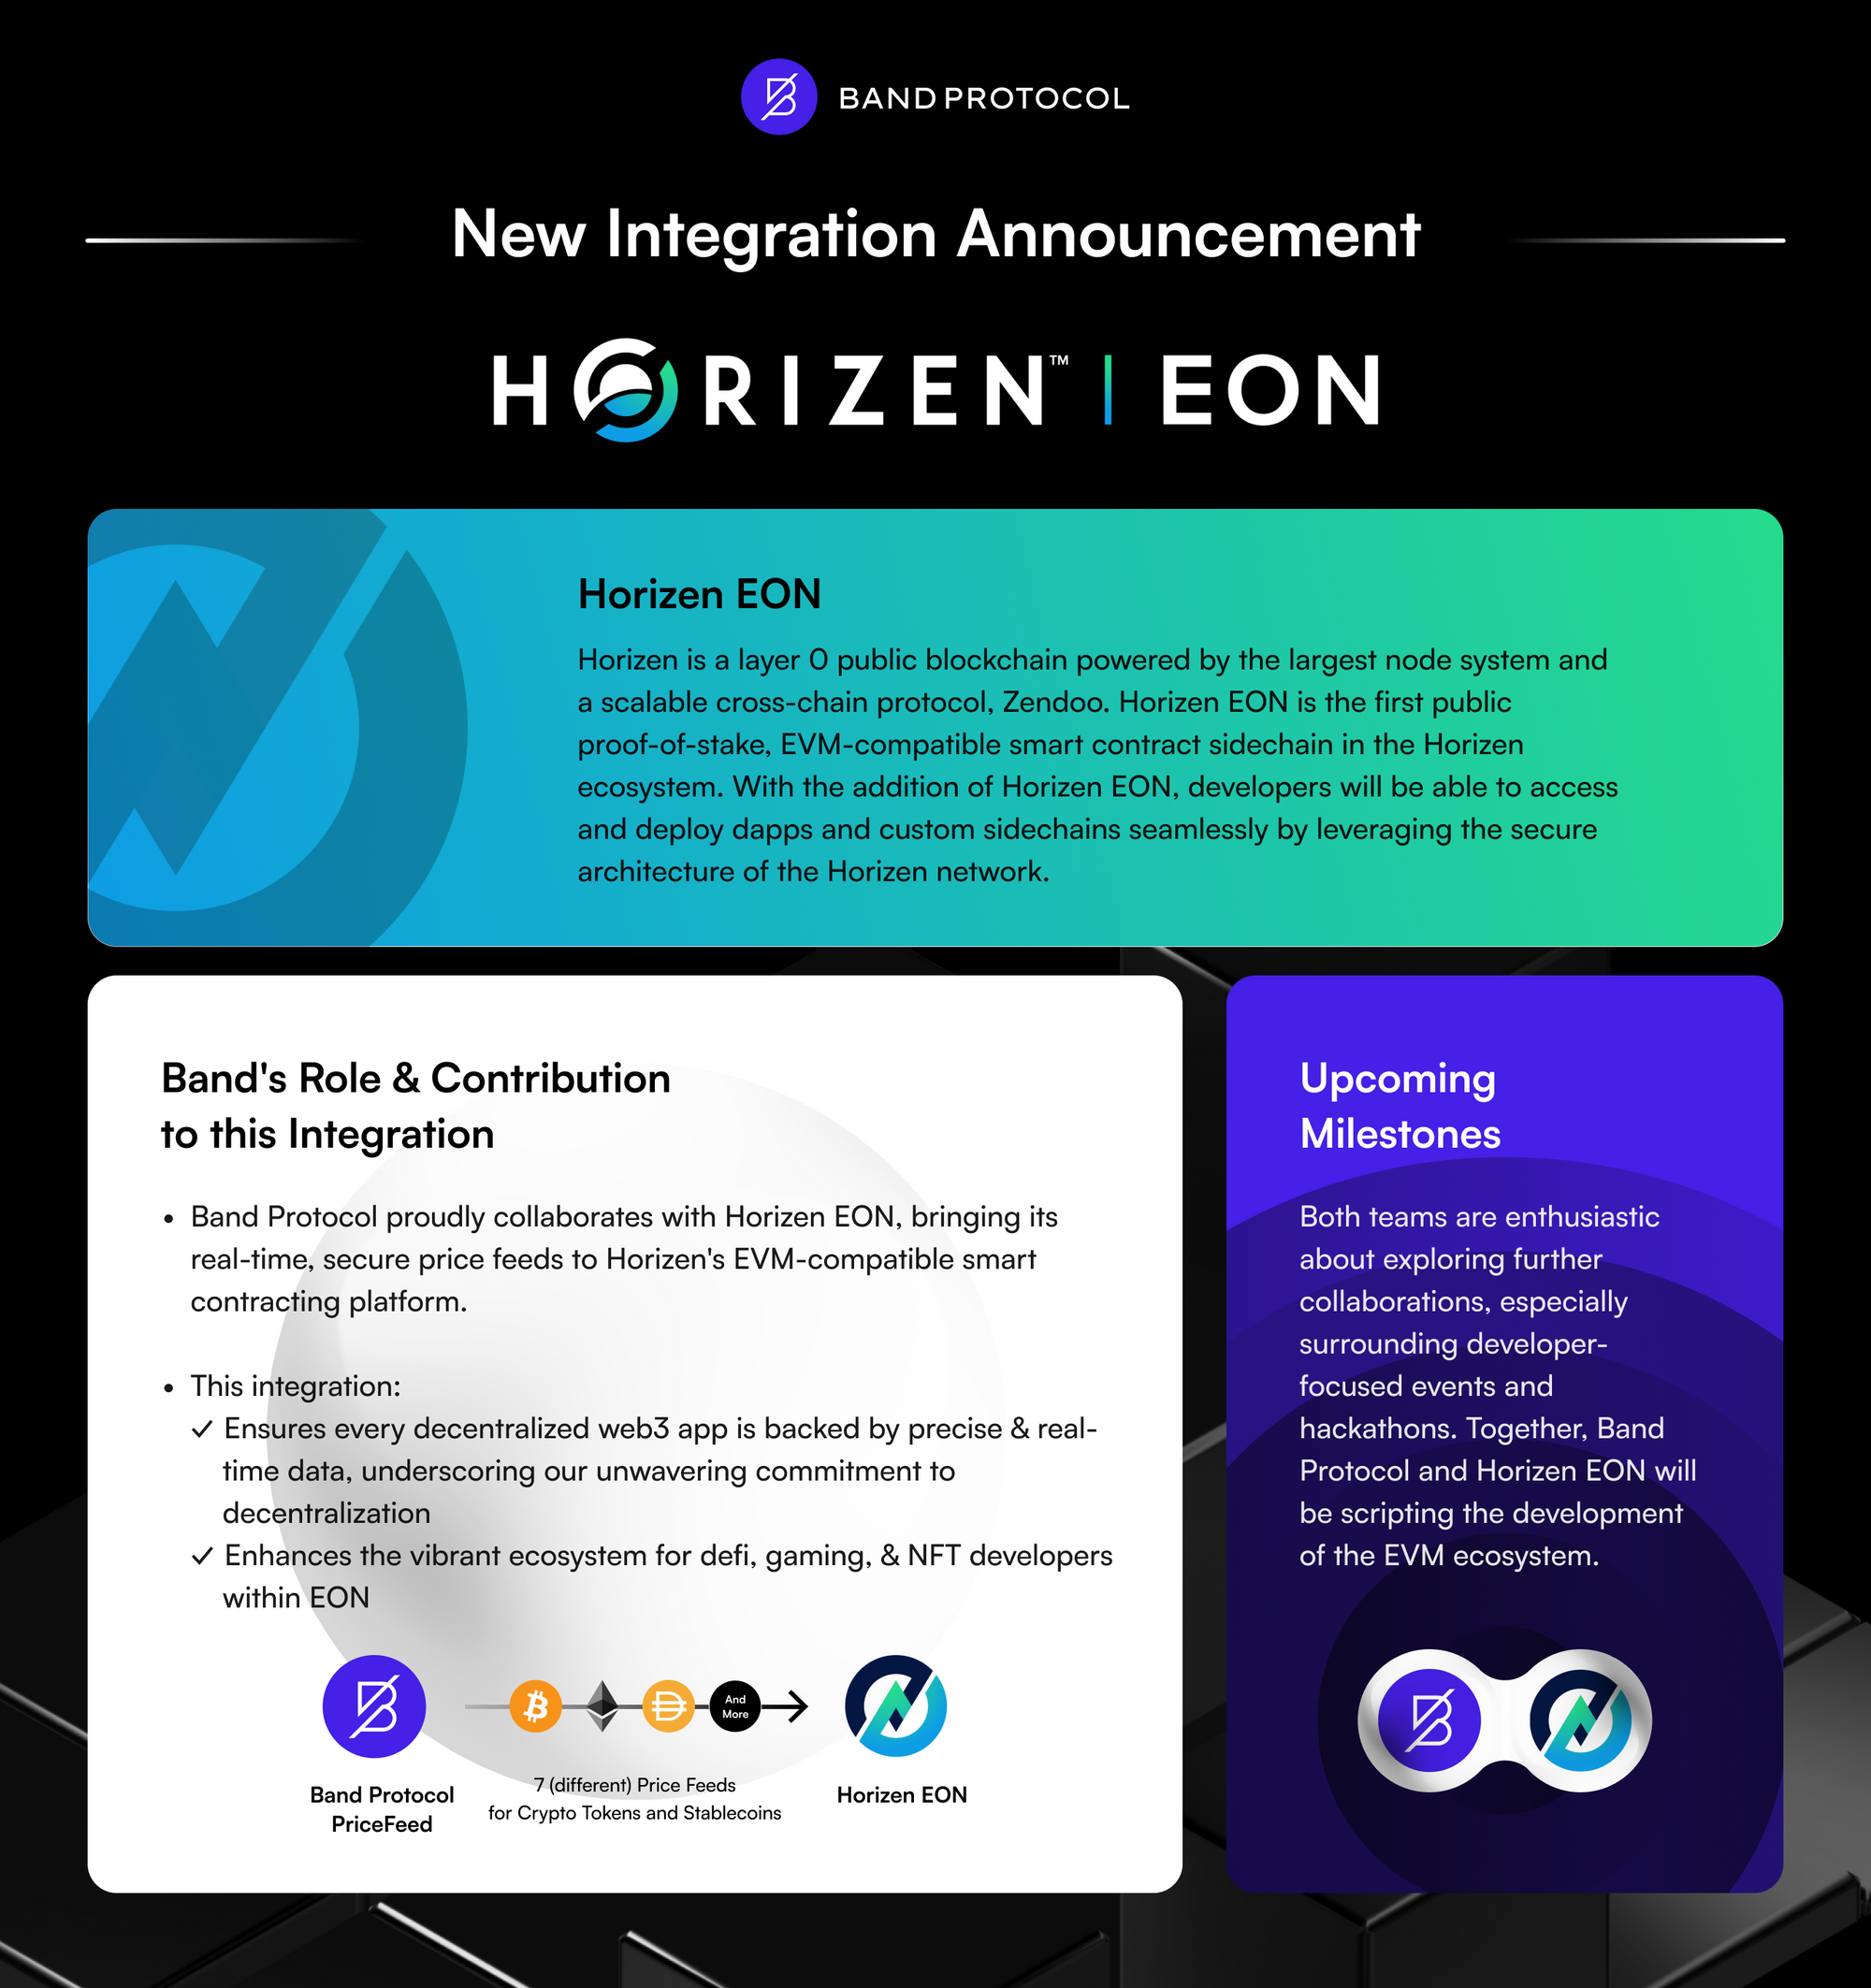 Band Protocol & Horizen EON Integration: Supercharging Horizen EON's Decentralized Ecosystem